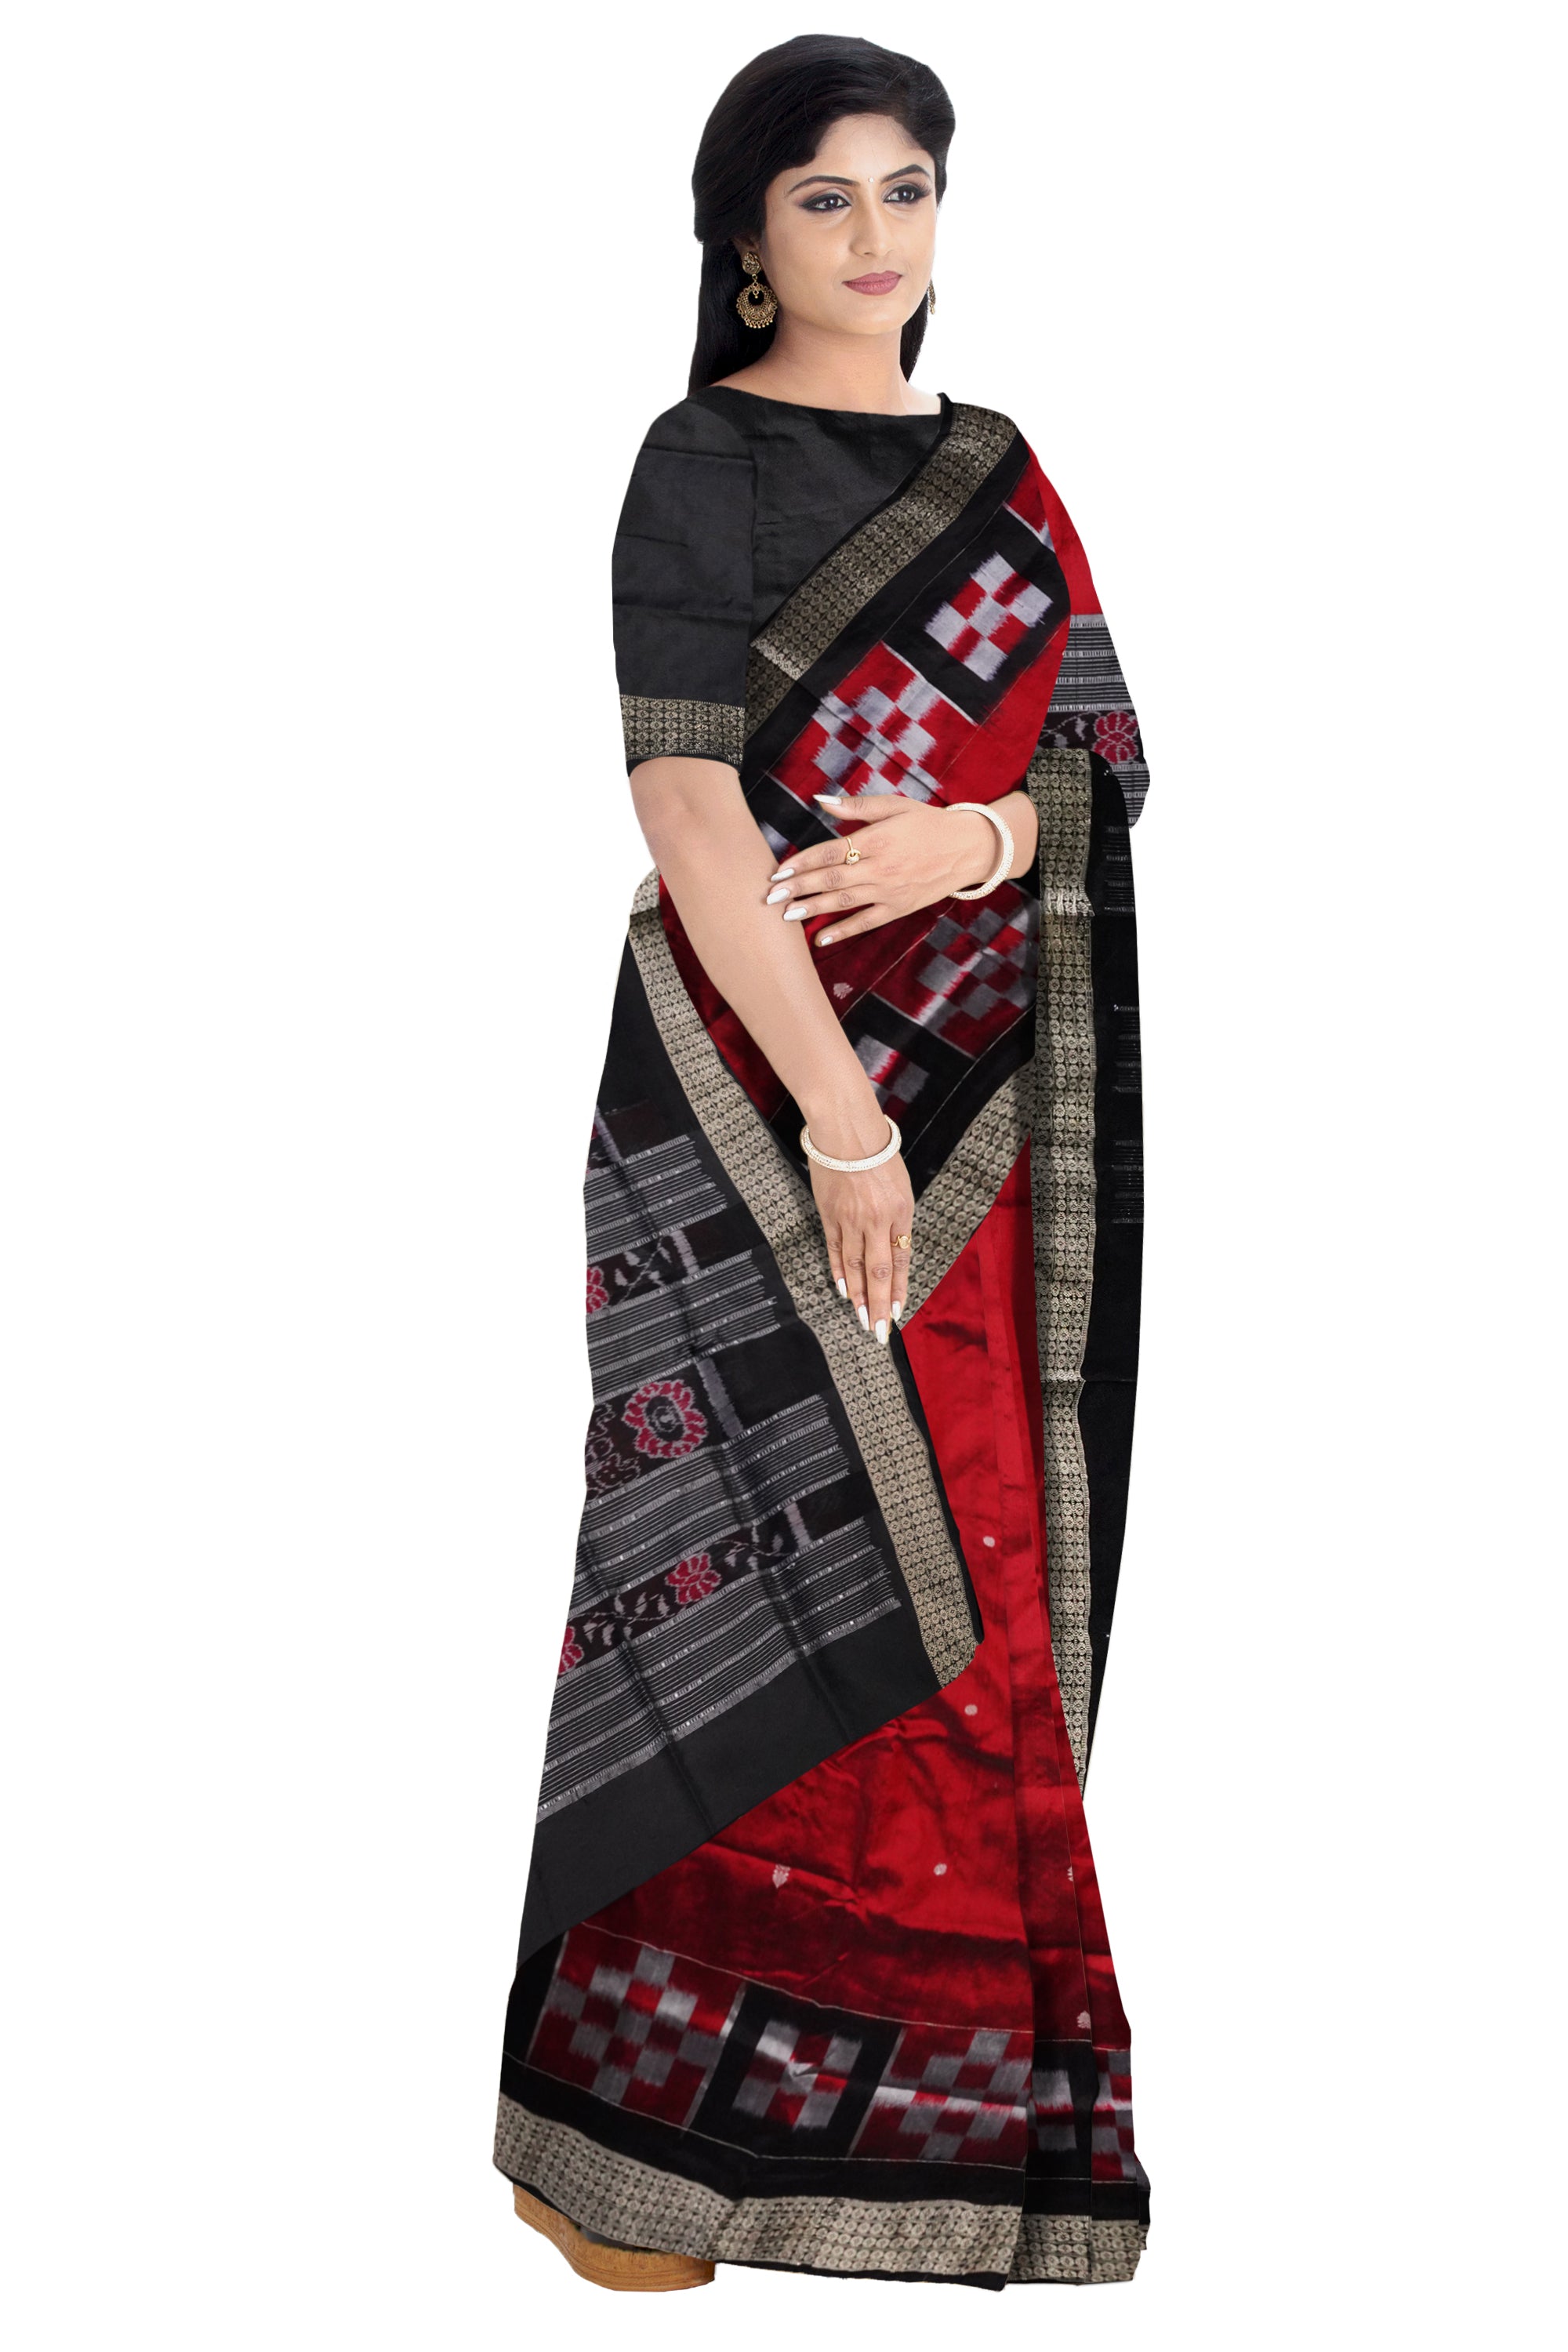 Border big Pasapali & body small booty pattern pata saree in Maroon & Black color. - Koshali Arts & Crafts Enterprise